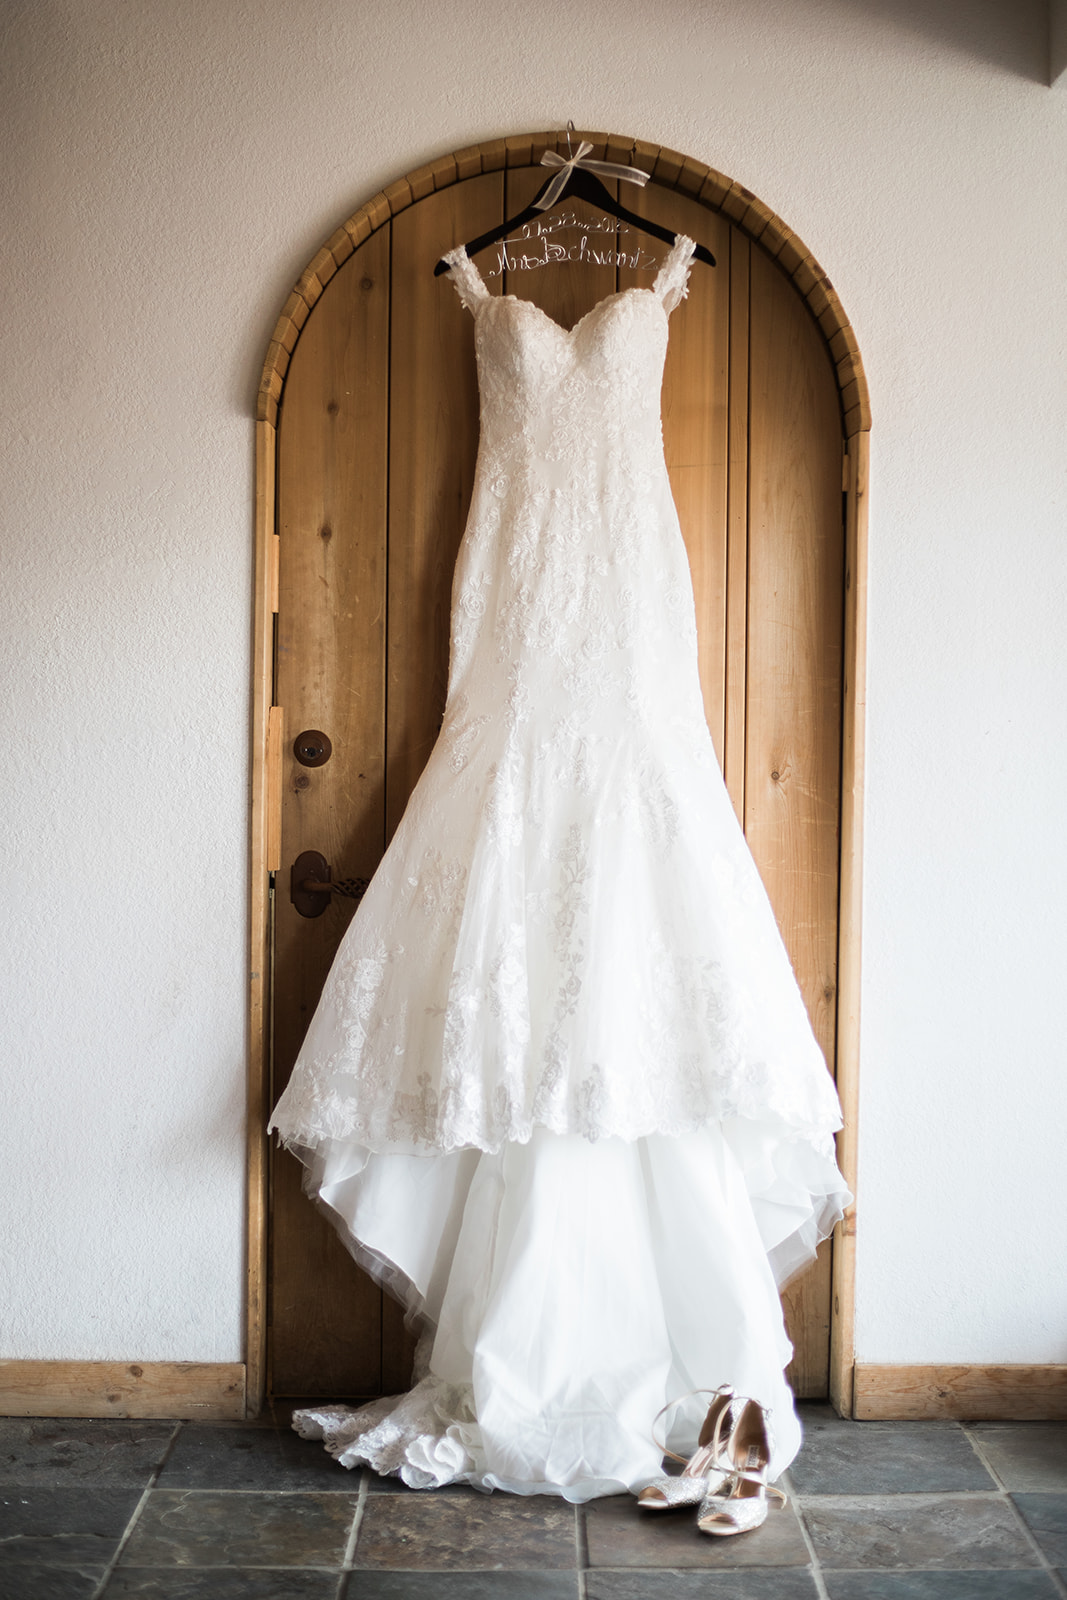 dress hanging on door at Silverpick Lodge